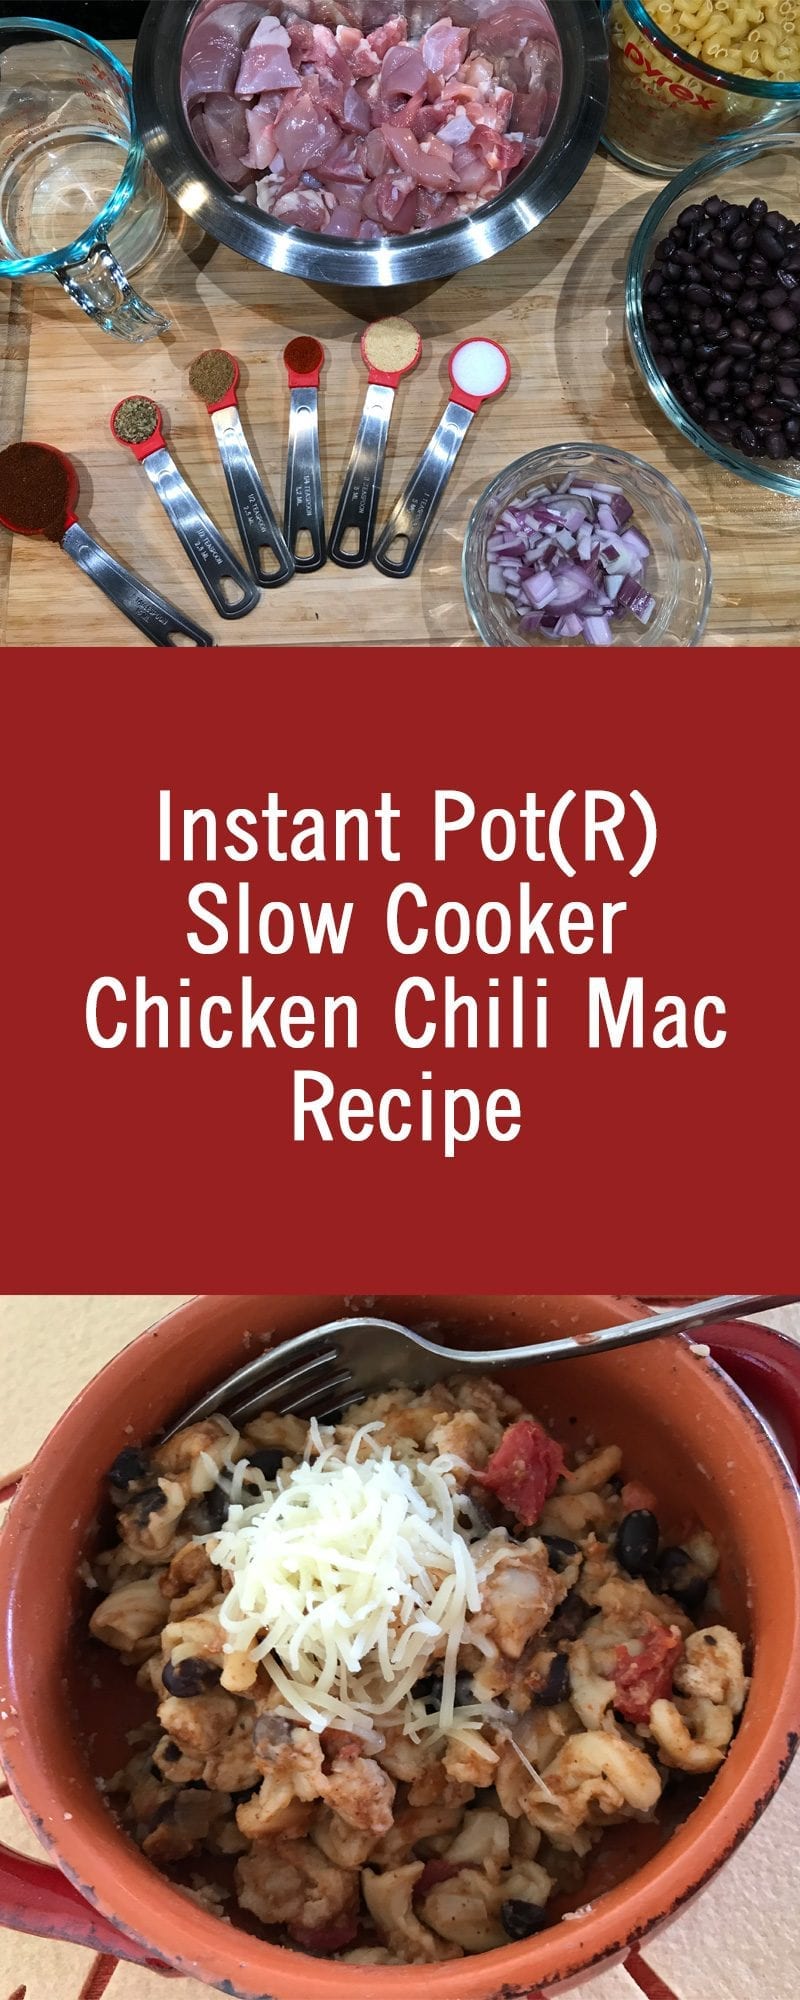 Instant Pot(R) Slow Cooker Chicken Chili Mac Recipe